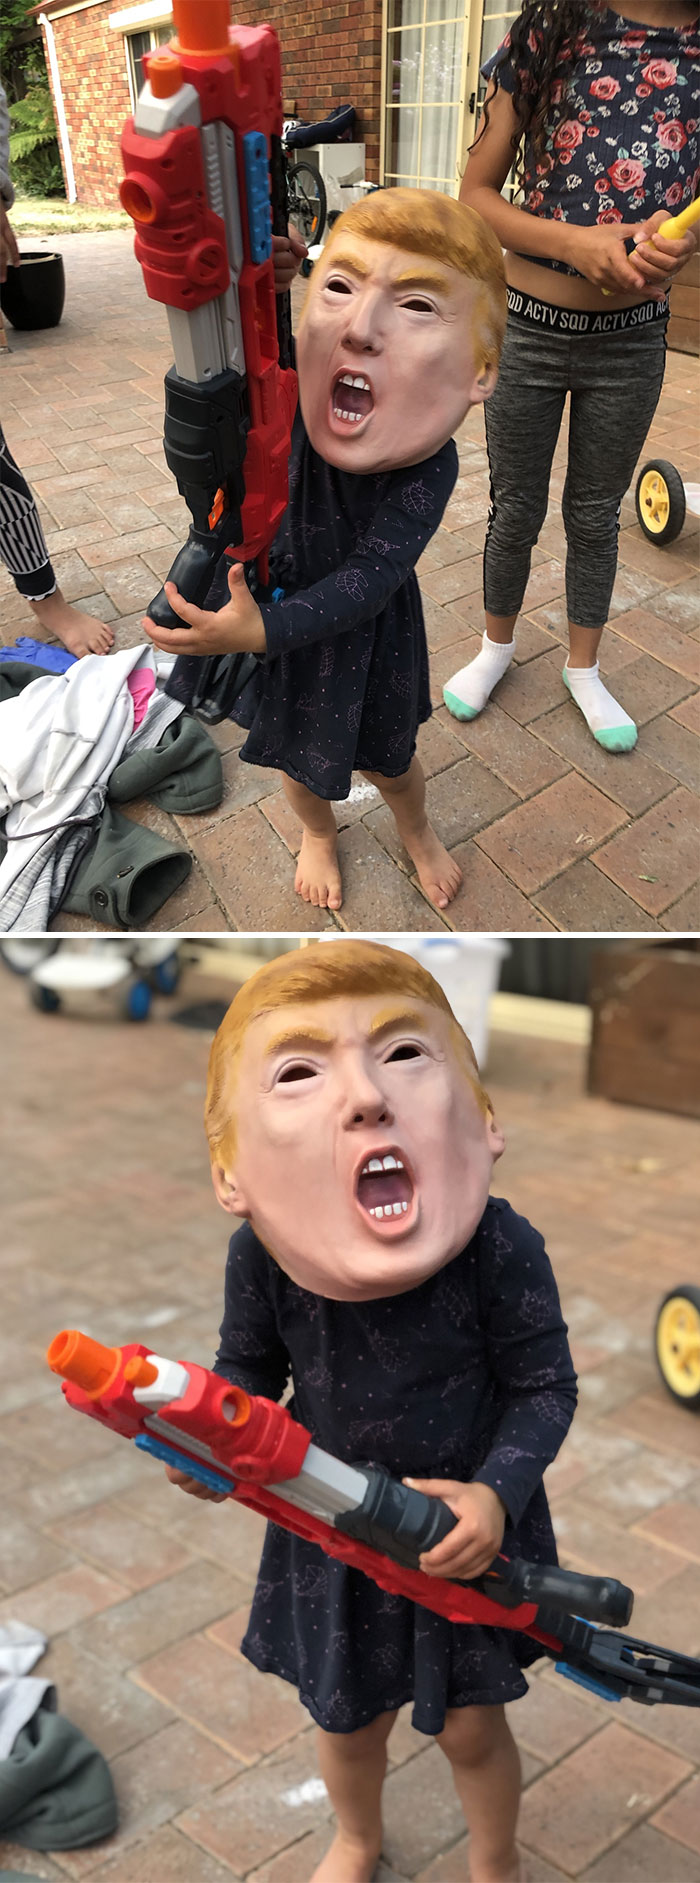 Máscara de Trump por 1$. Le estamos sacando partido